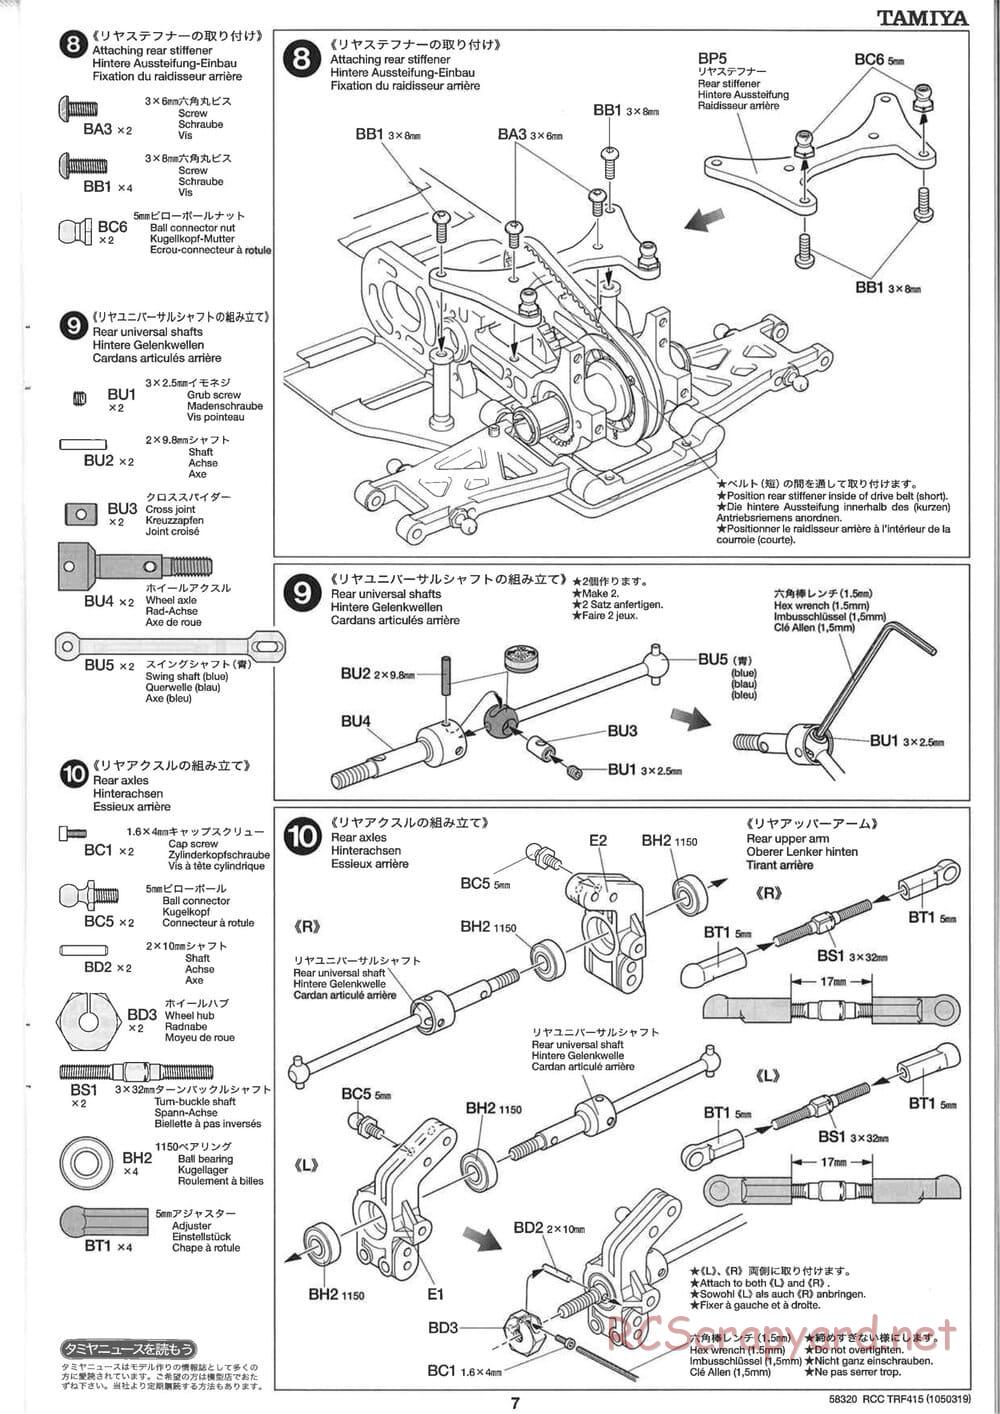 Tamiya - TRF415 Chassis - Manual - Page 7